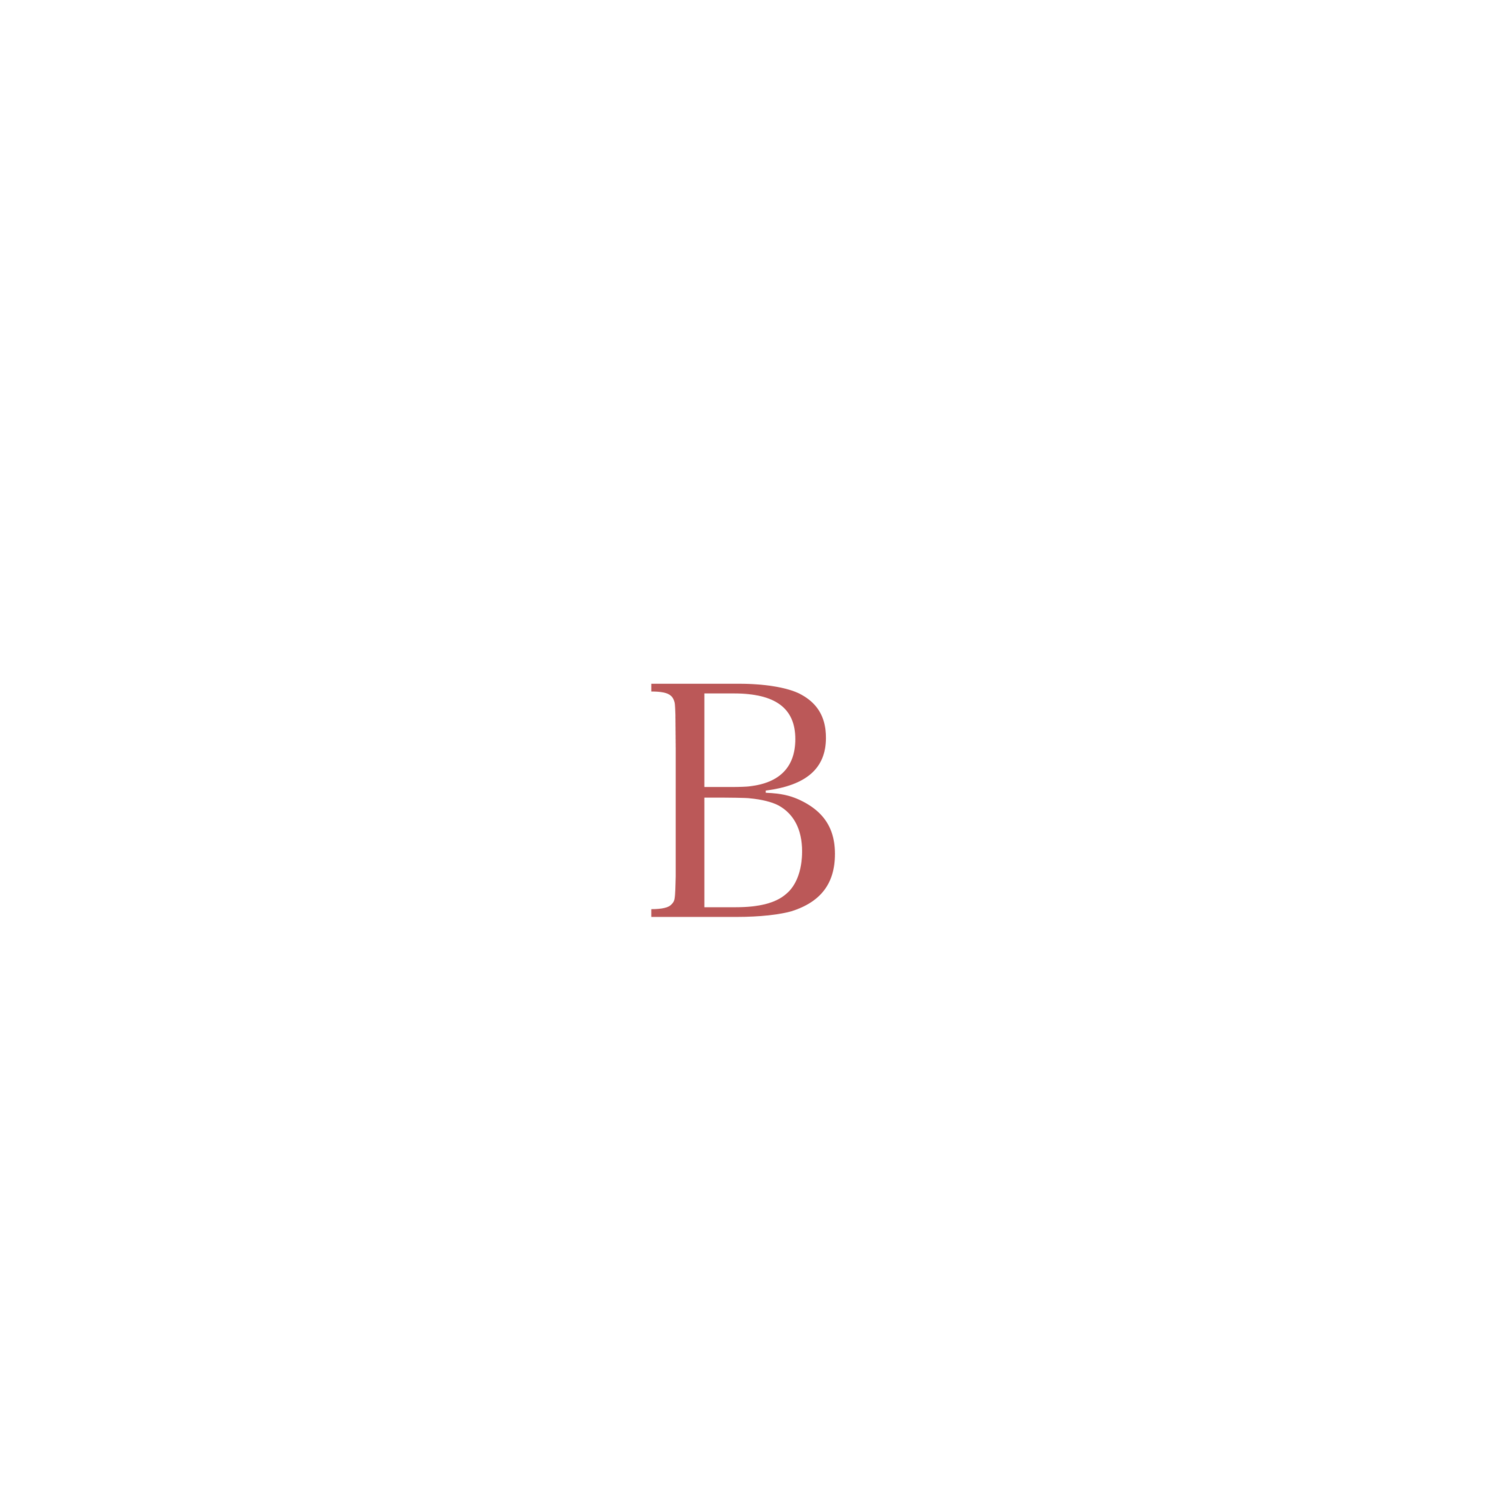 Spring Brook Yacht Club